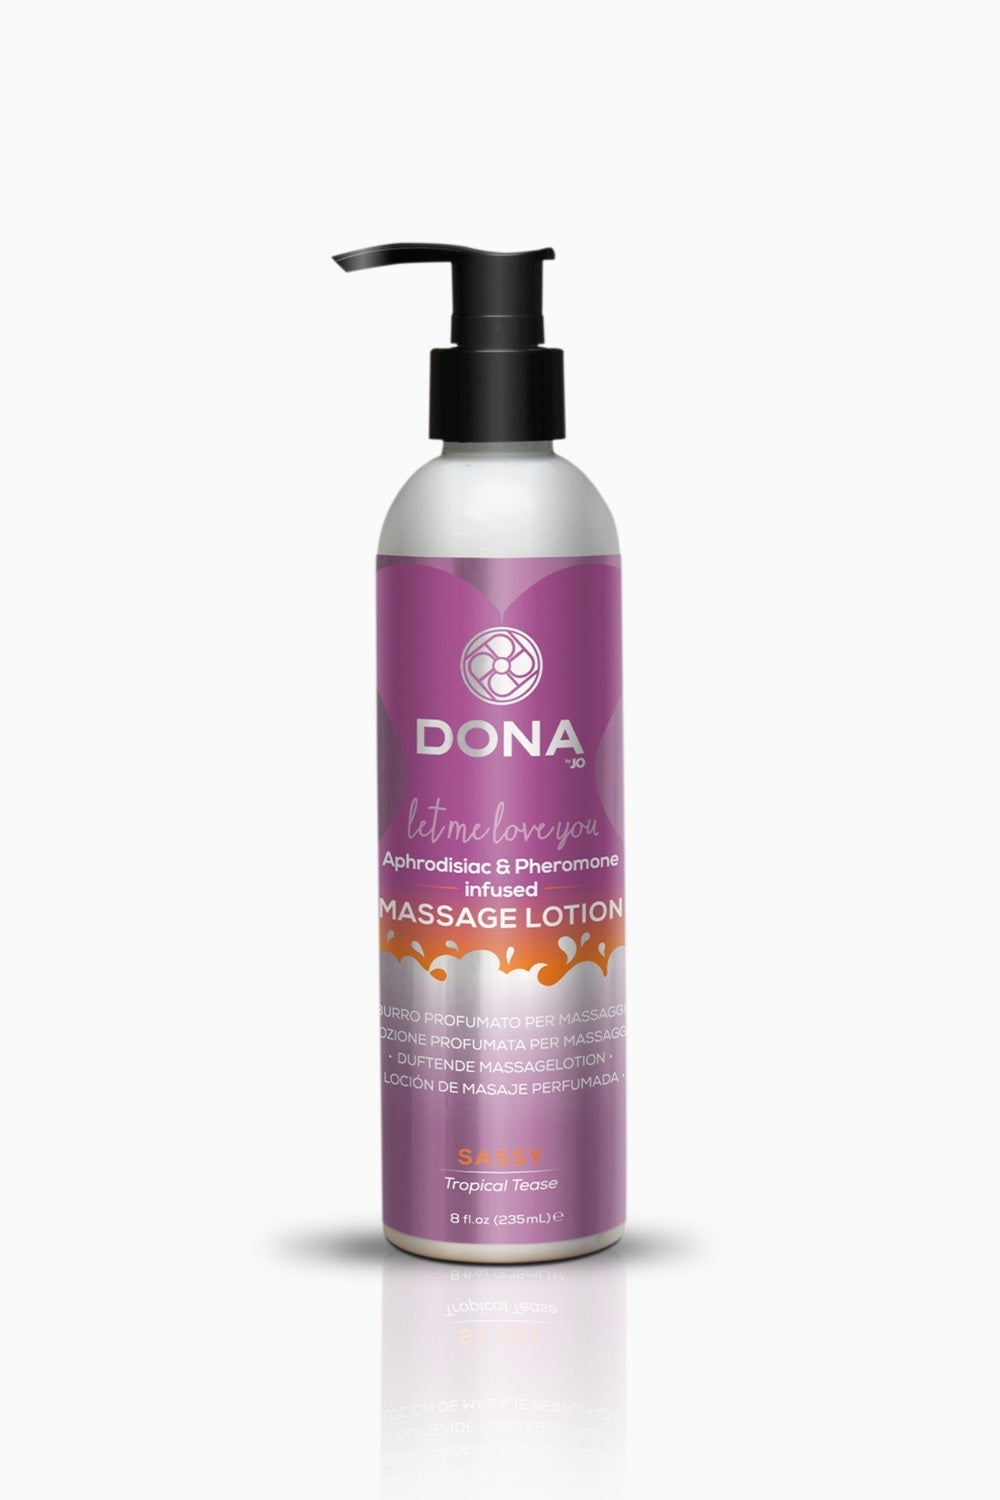 Dona Massage Lotion 250 ml - Tropical Tease